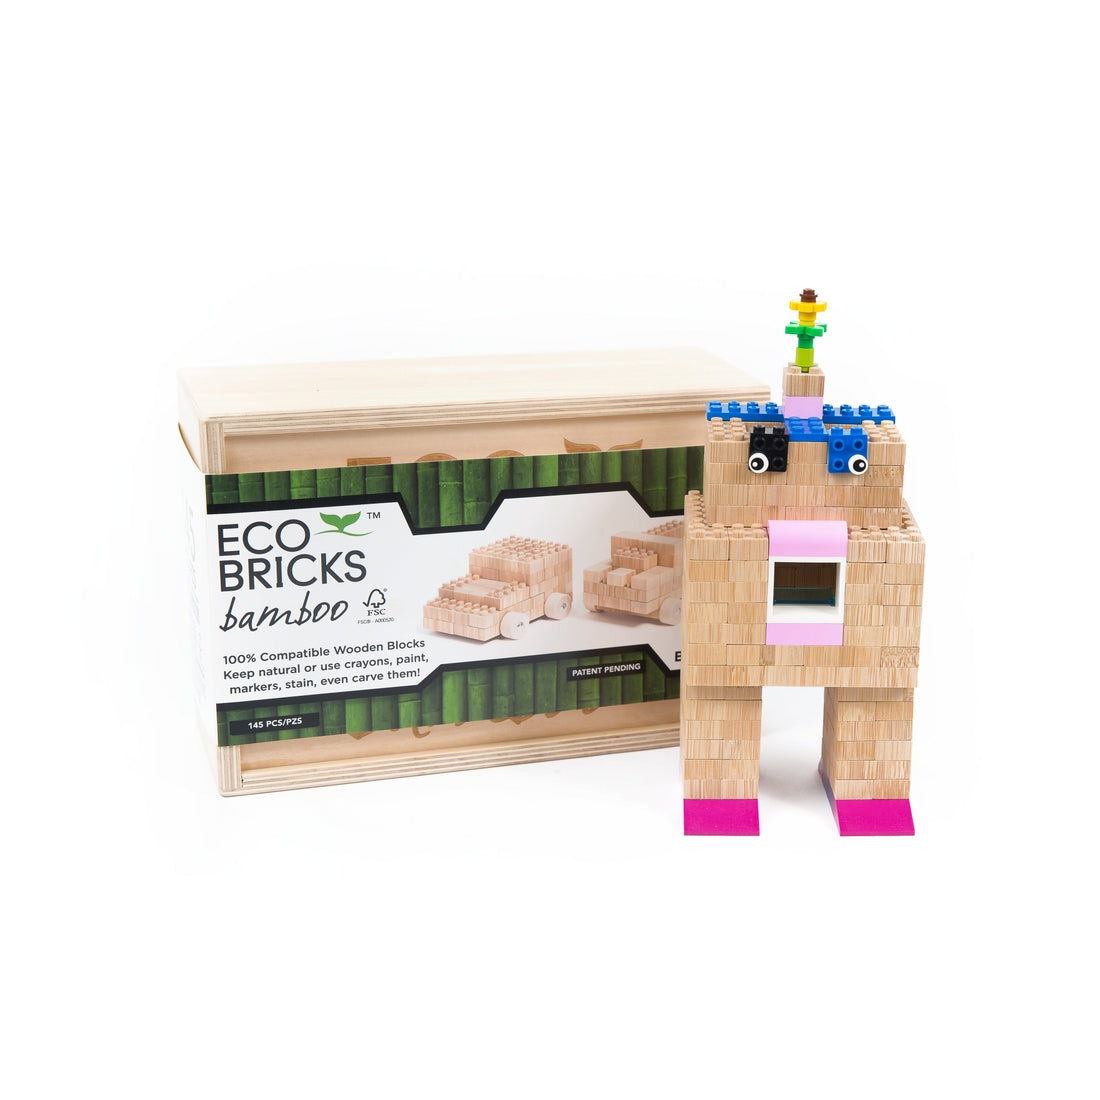 Eco-Bricks Bamboo 145-piece box with a structure built of Bamboo Eco-Bricks